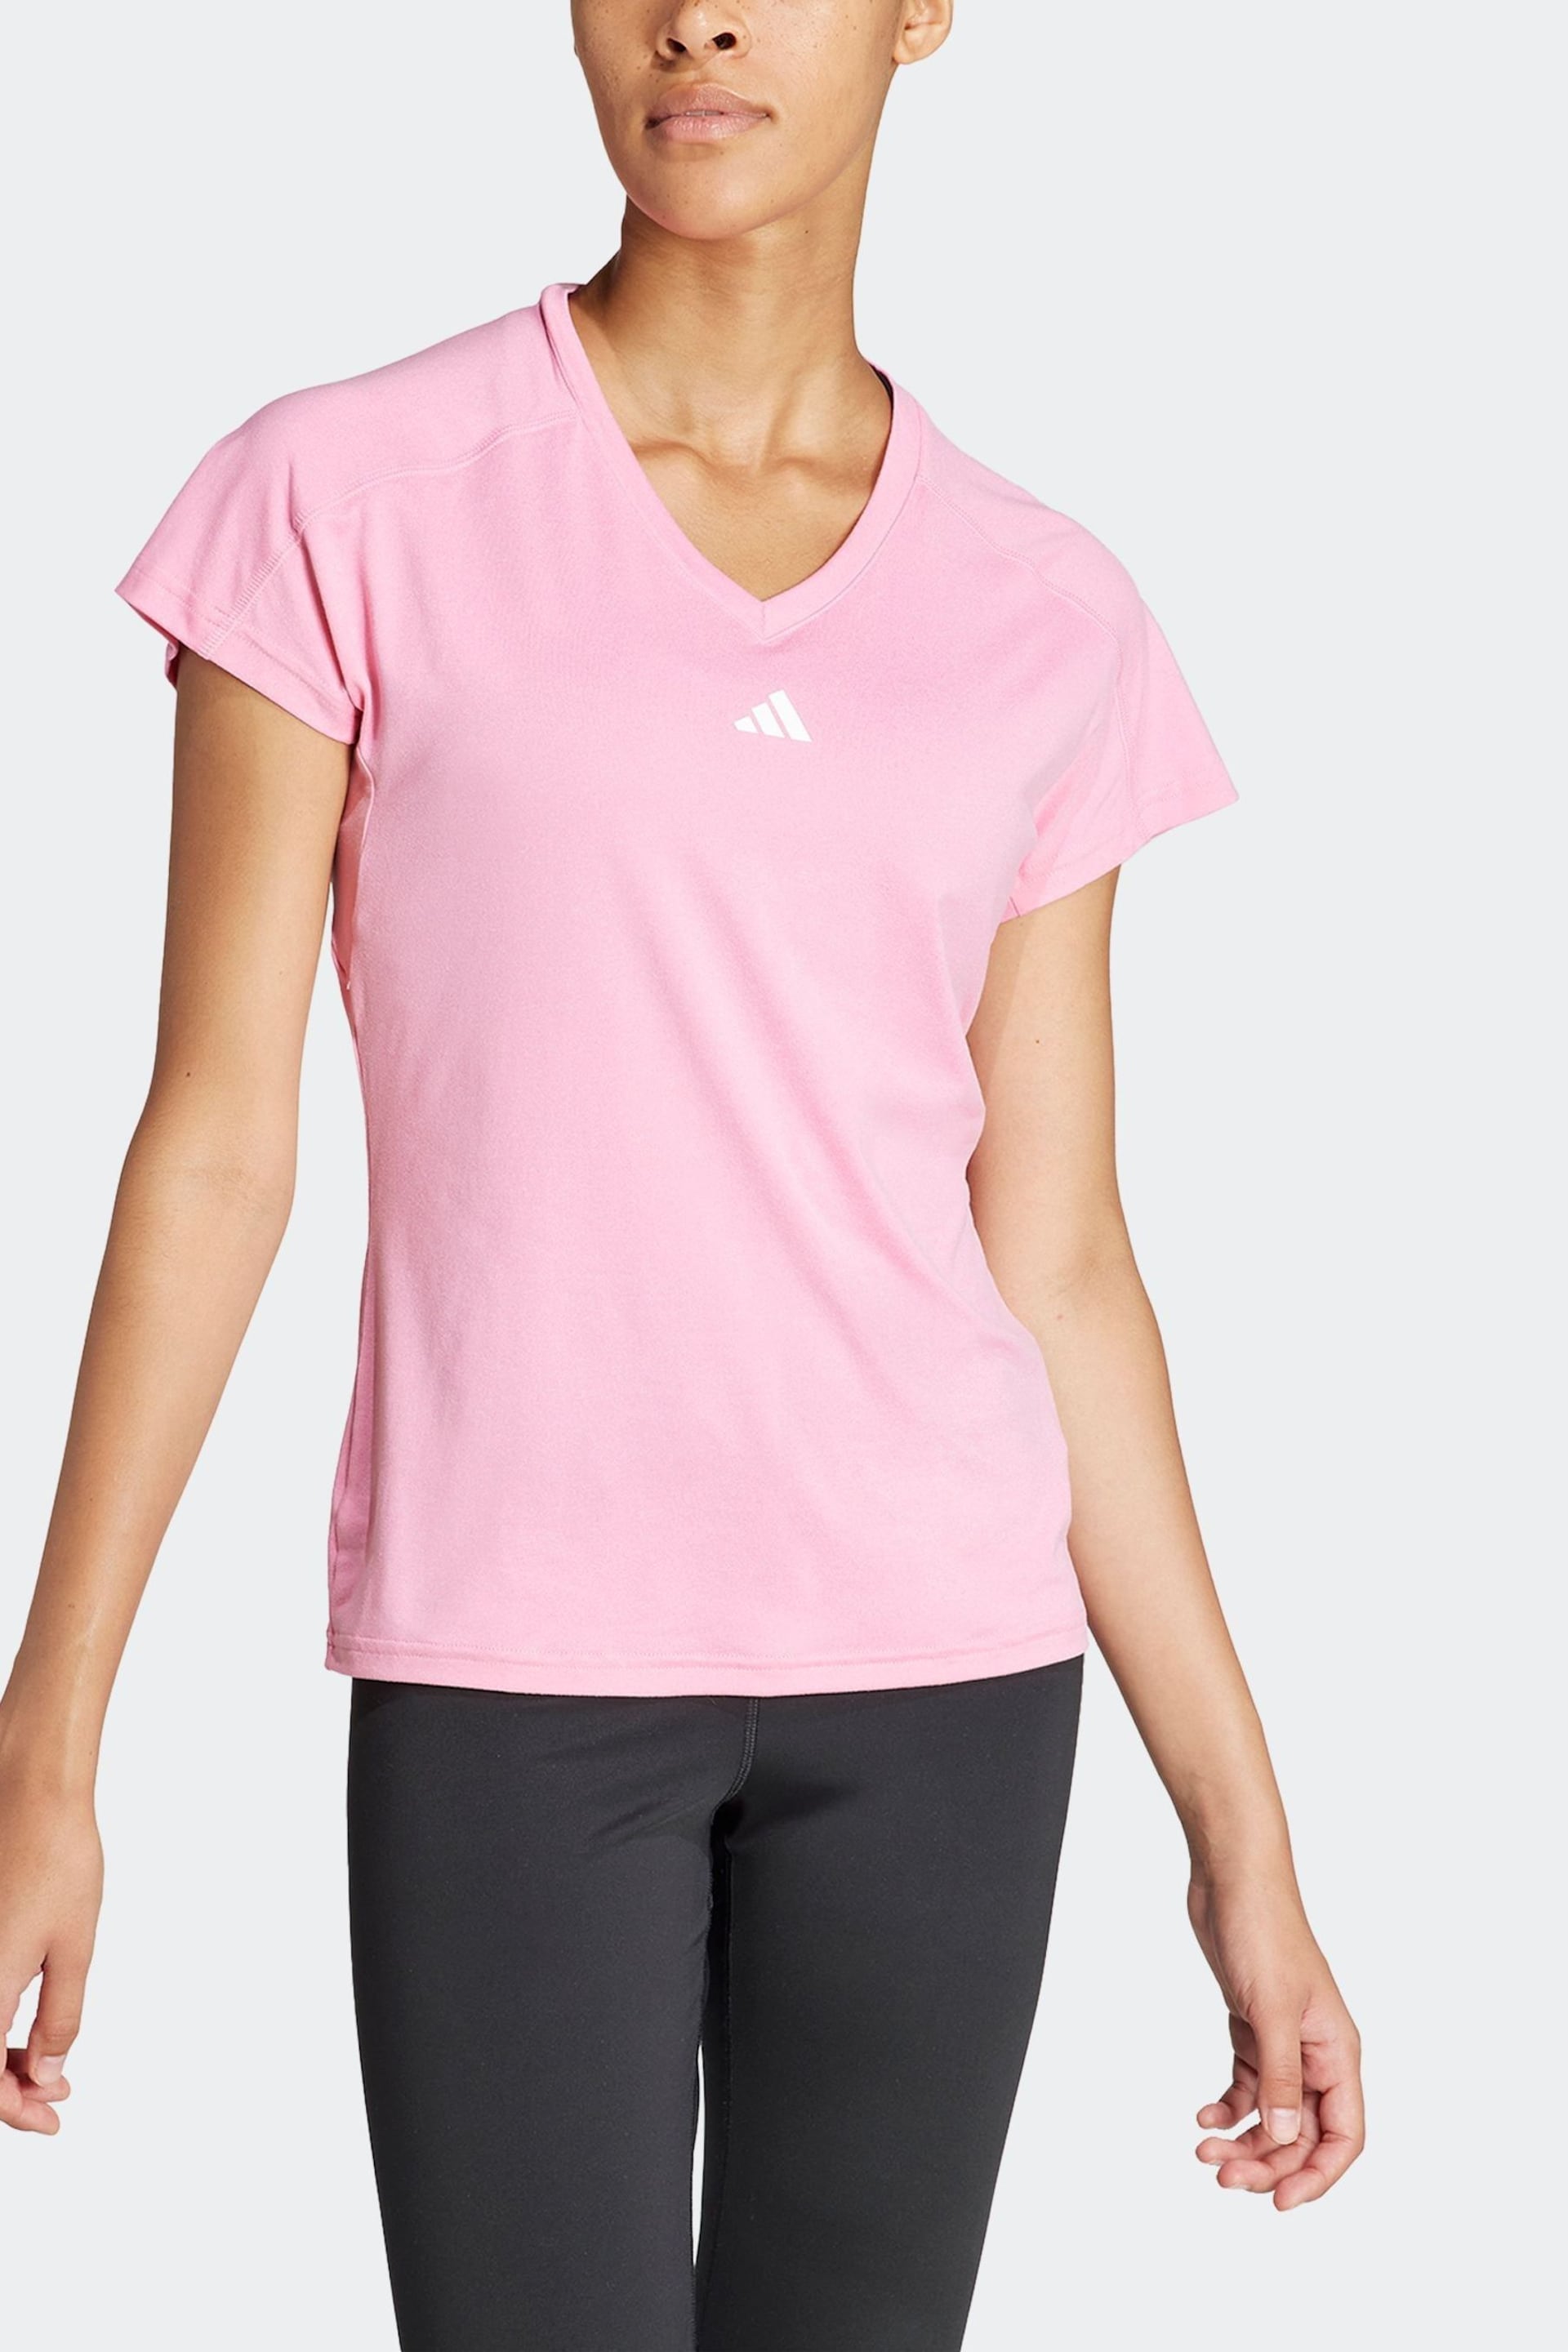 adidas Pink Aeroready Train Essentials Minimal Branding V-Neck T-Shirt - Image 4 of 7